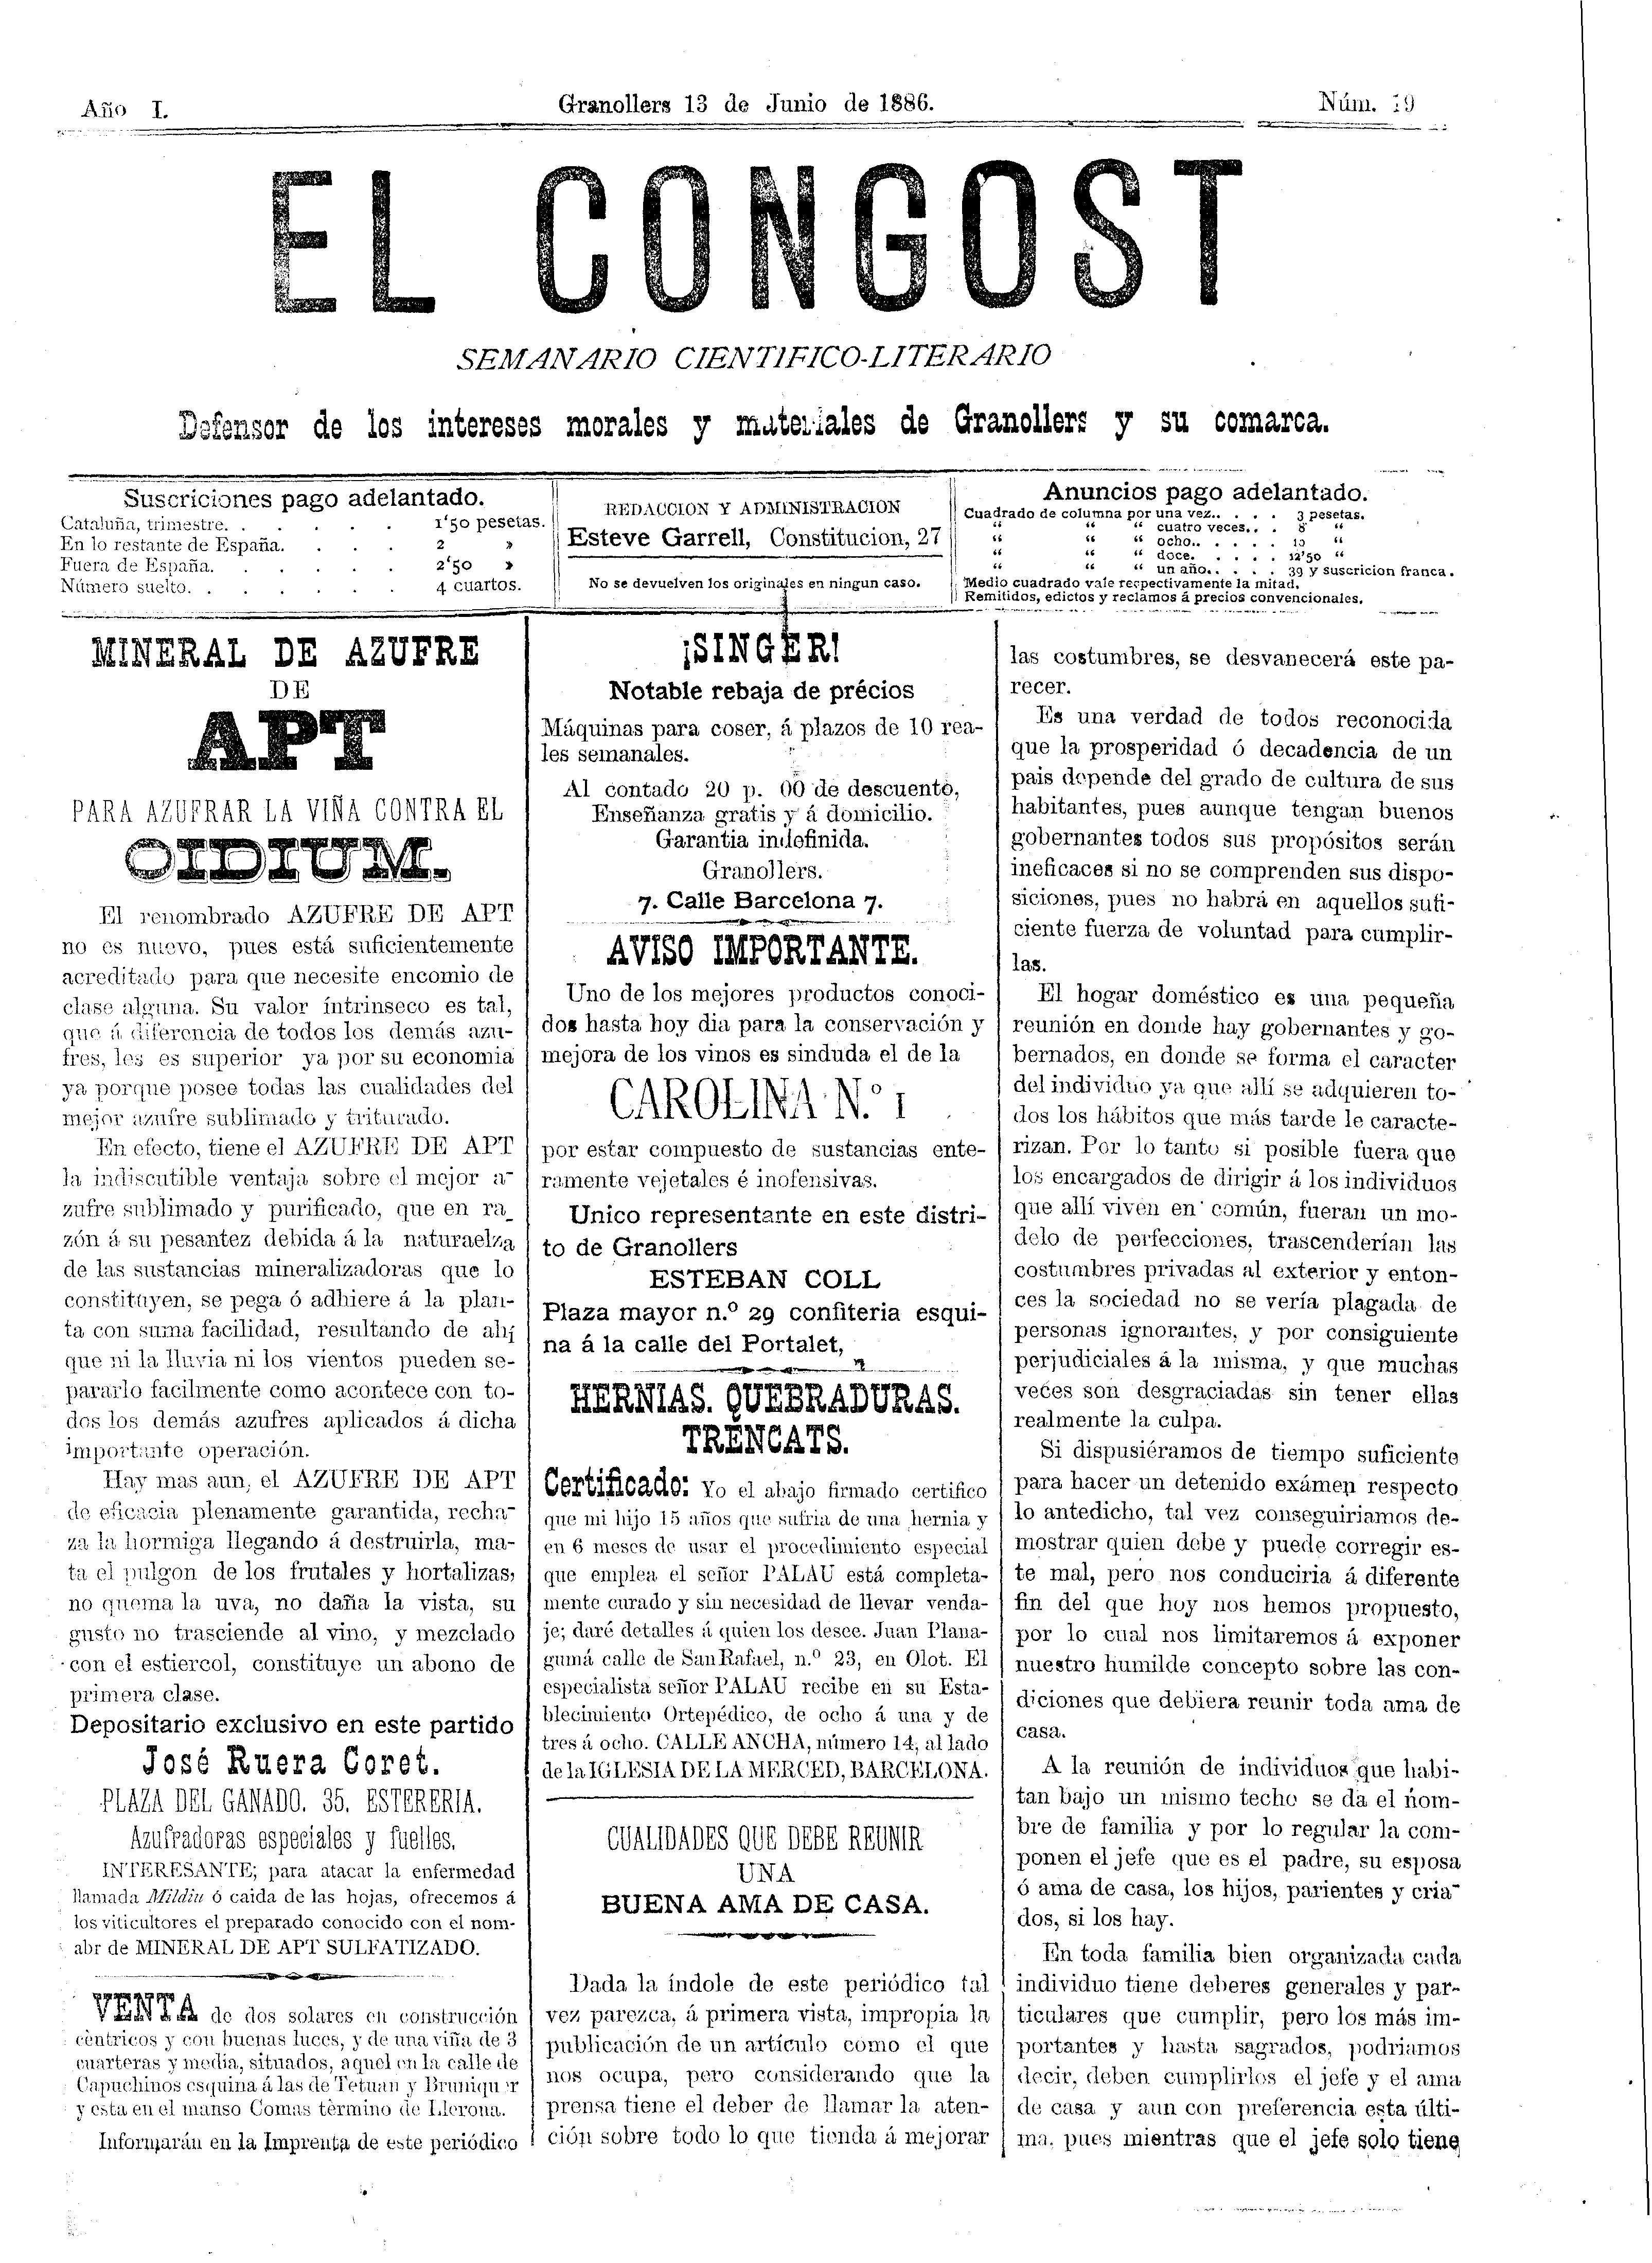 El Congost, 13/6/1886 [Ejemplar]